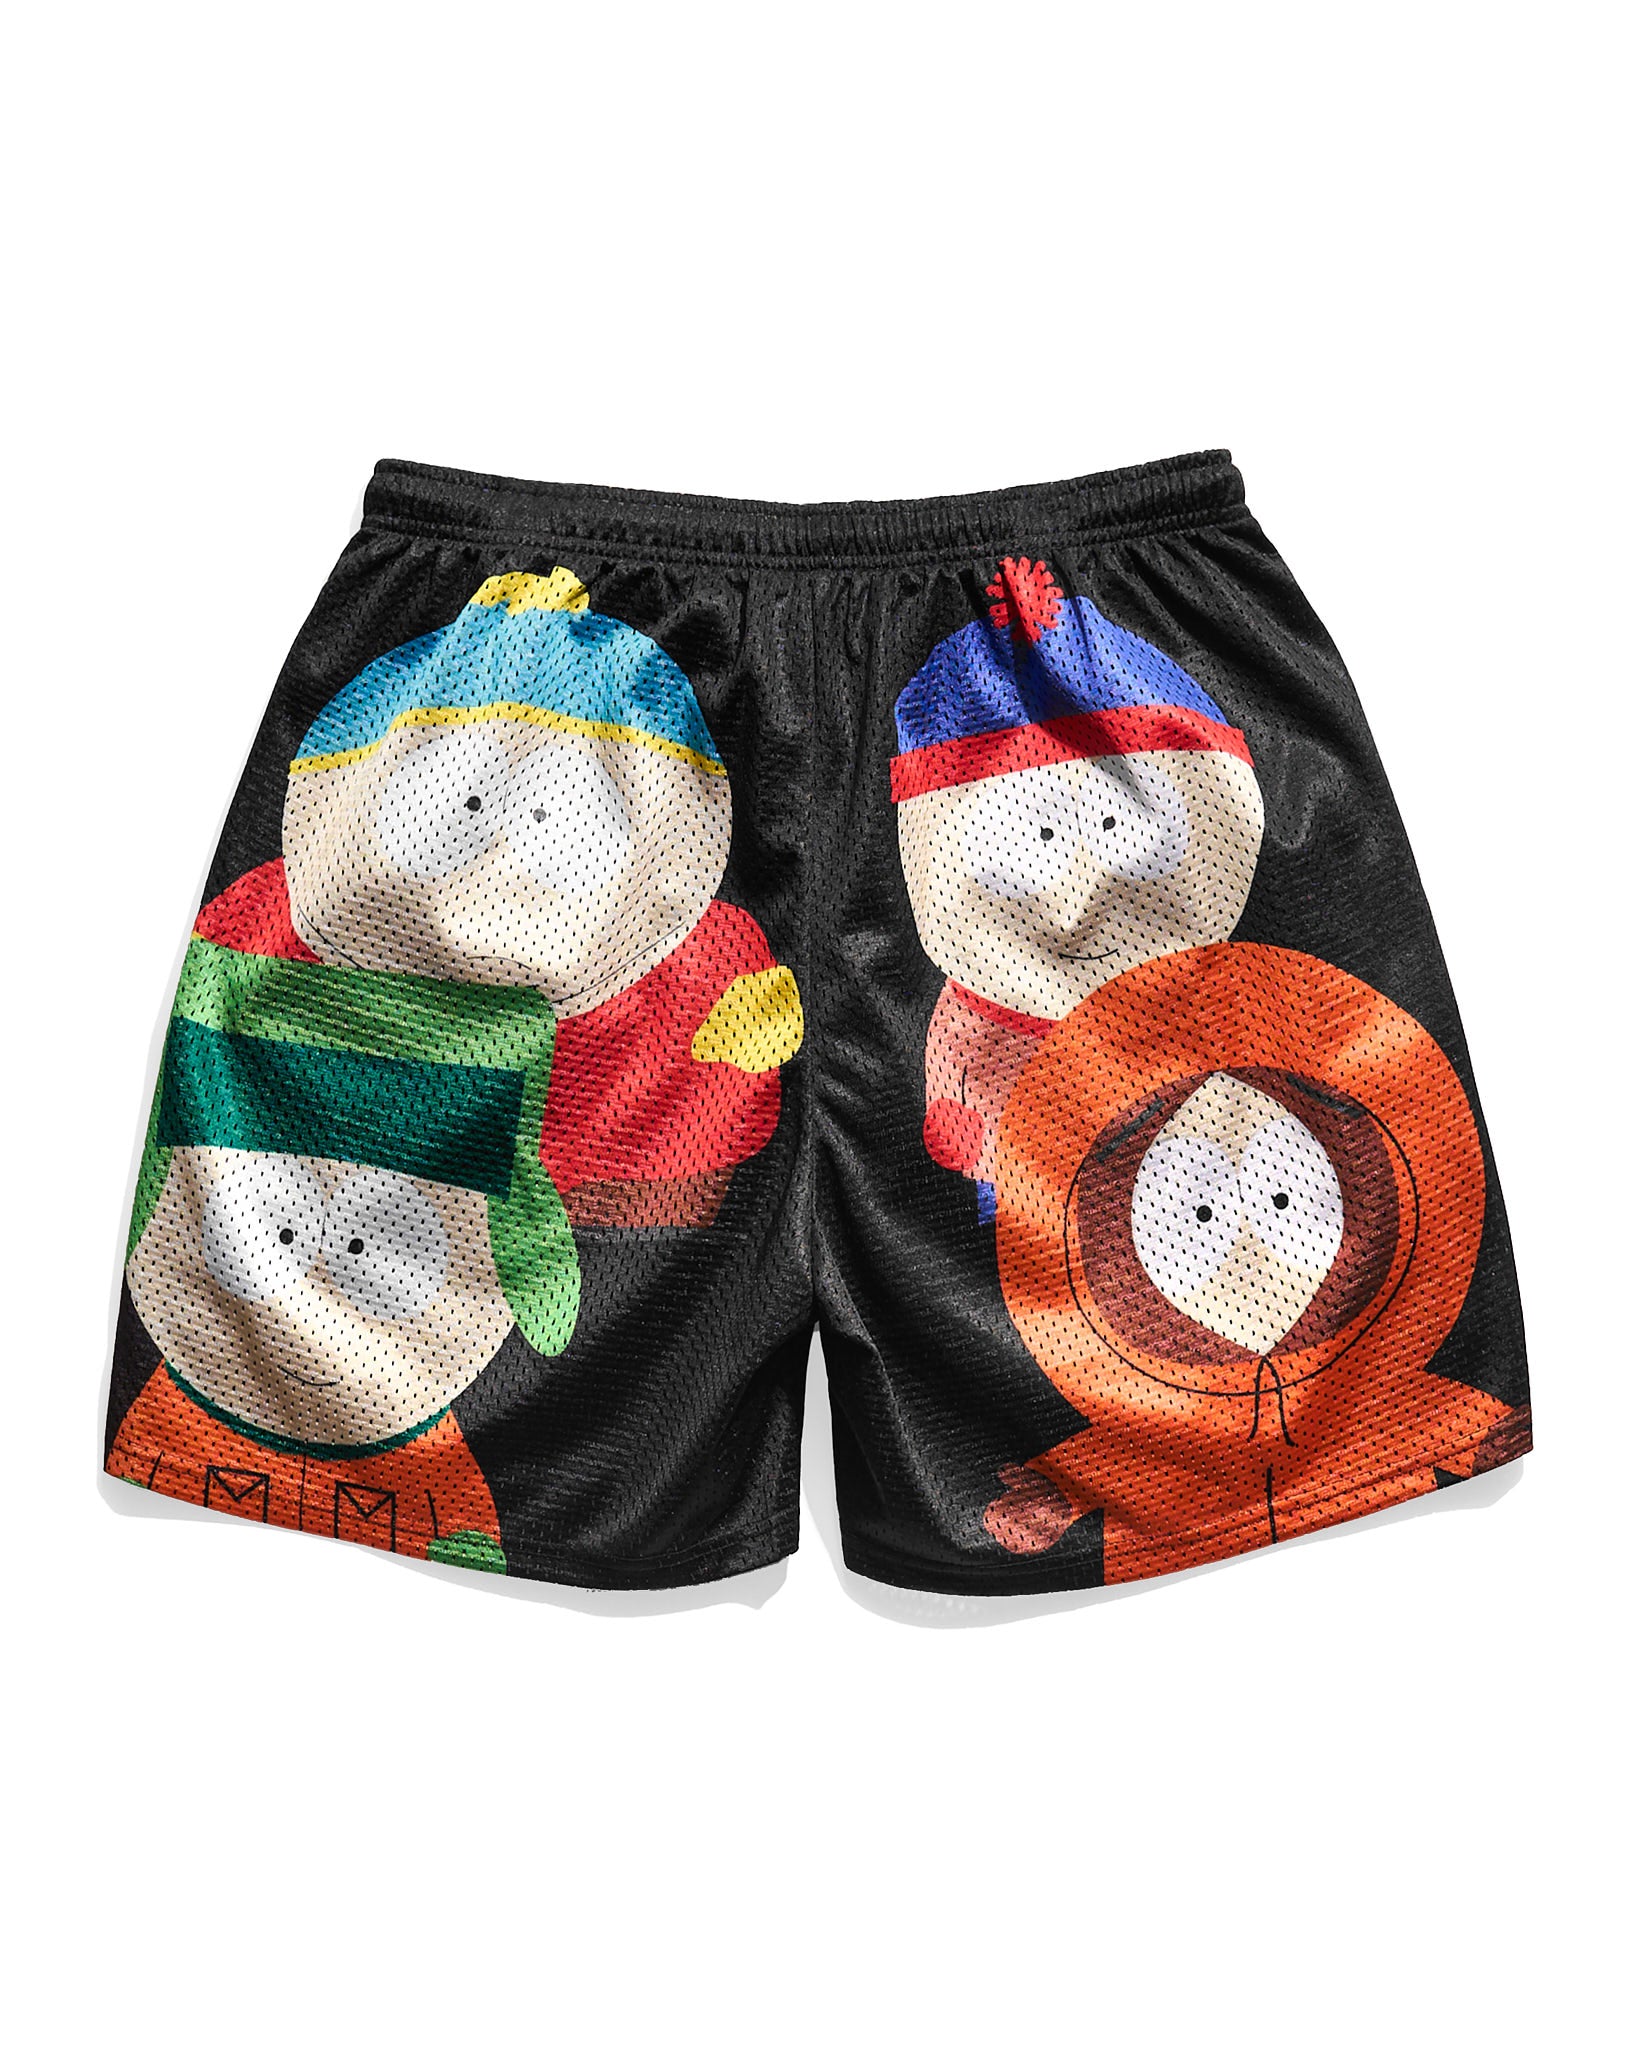 South Park 4 Boys Retro Shorts